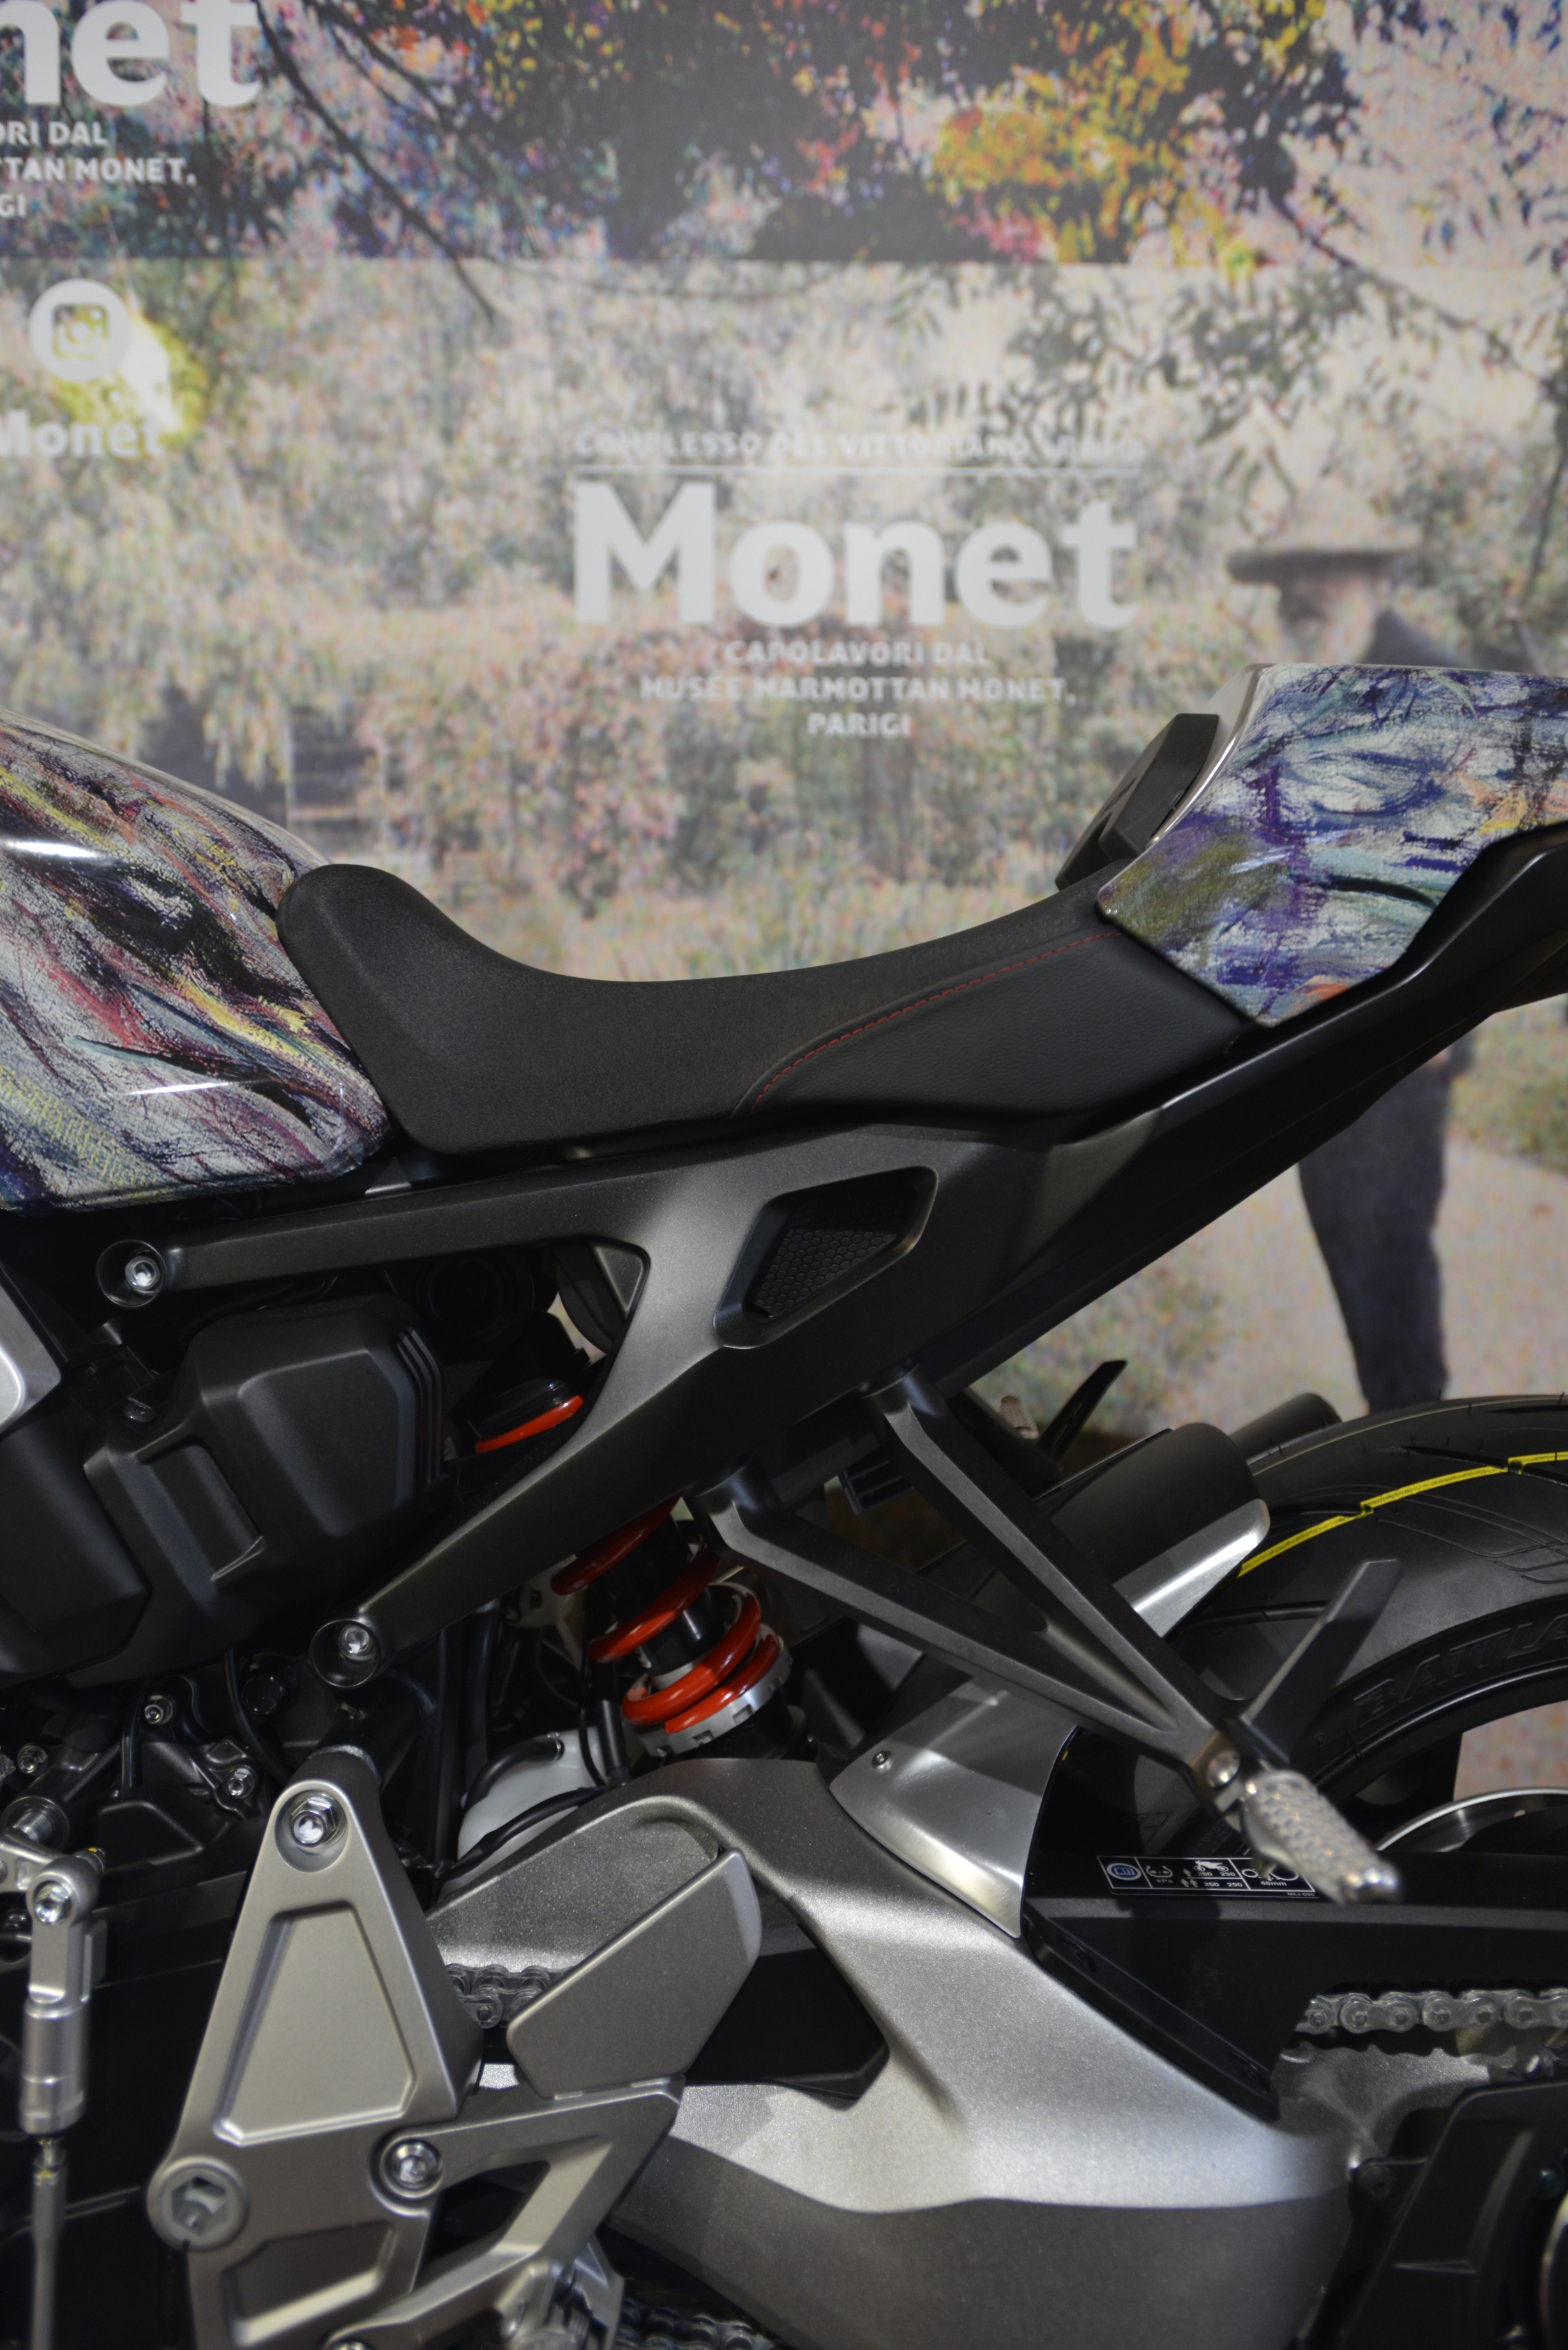 005 -Honda Monet foto iskra coronelli per Arthemisia-2018